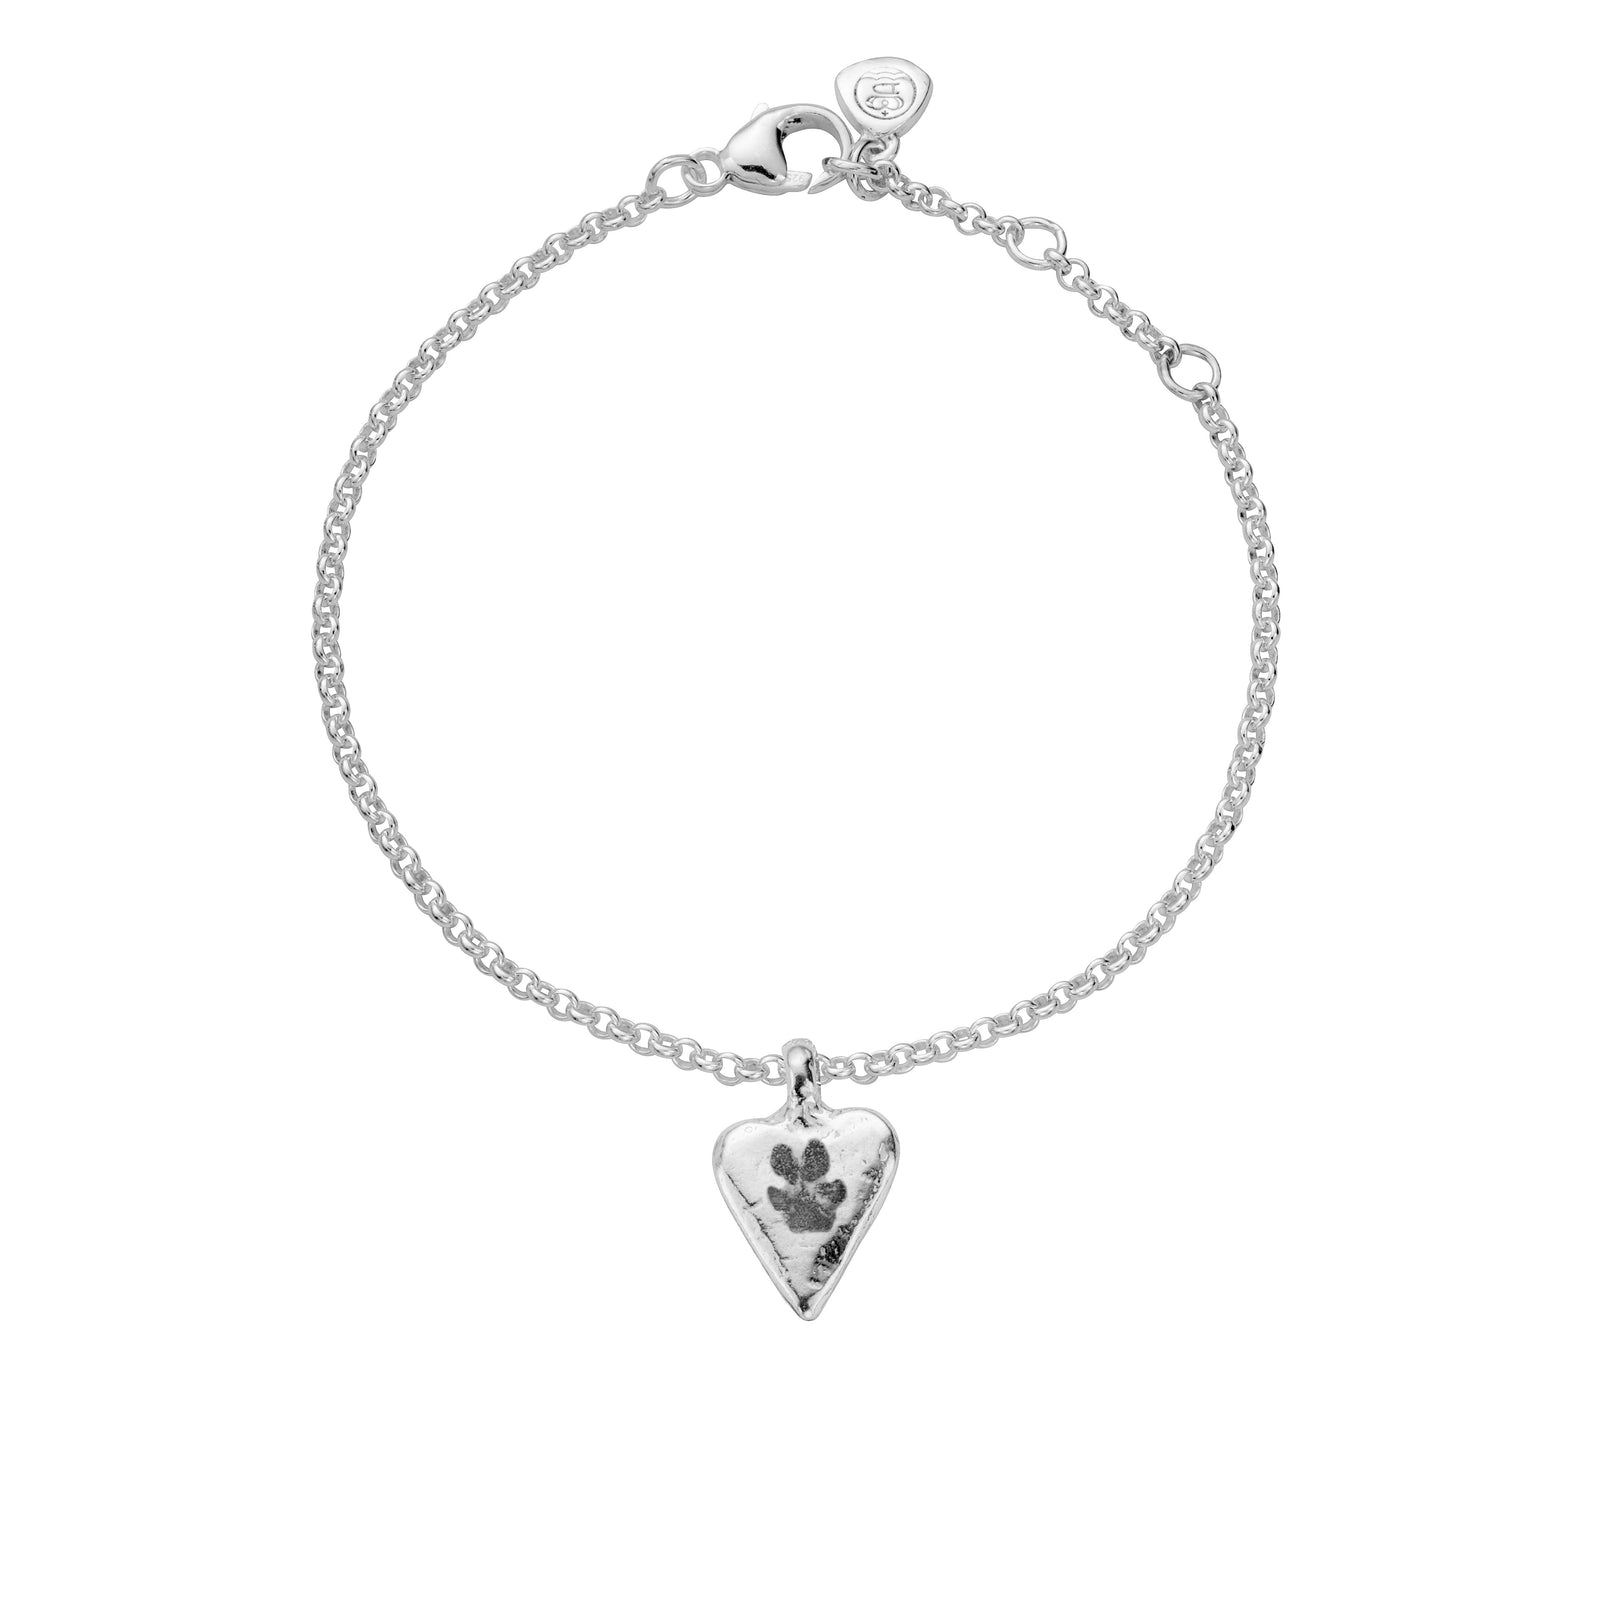 Silver Mini Heart Chain Bracelet with Paw Print